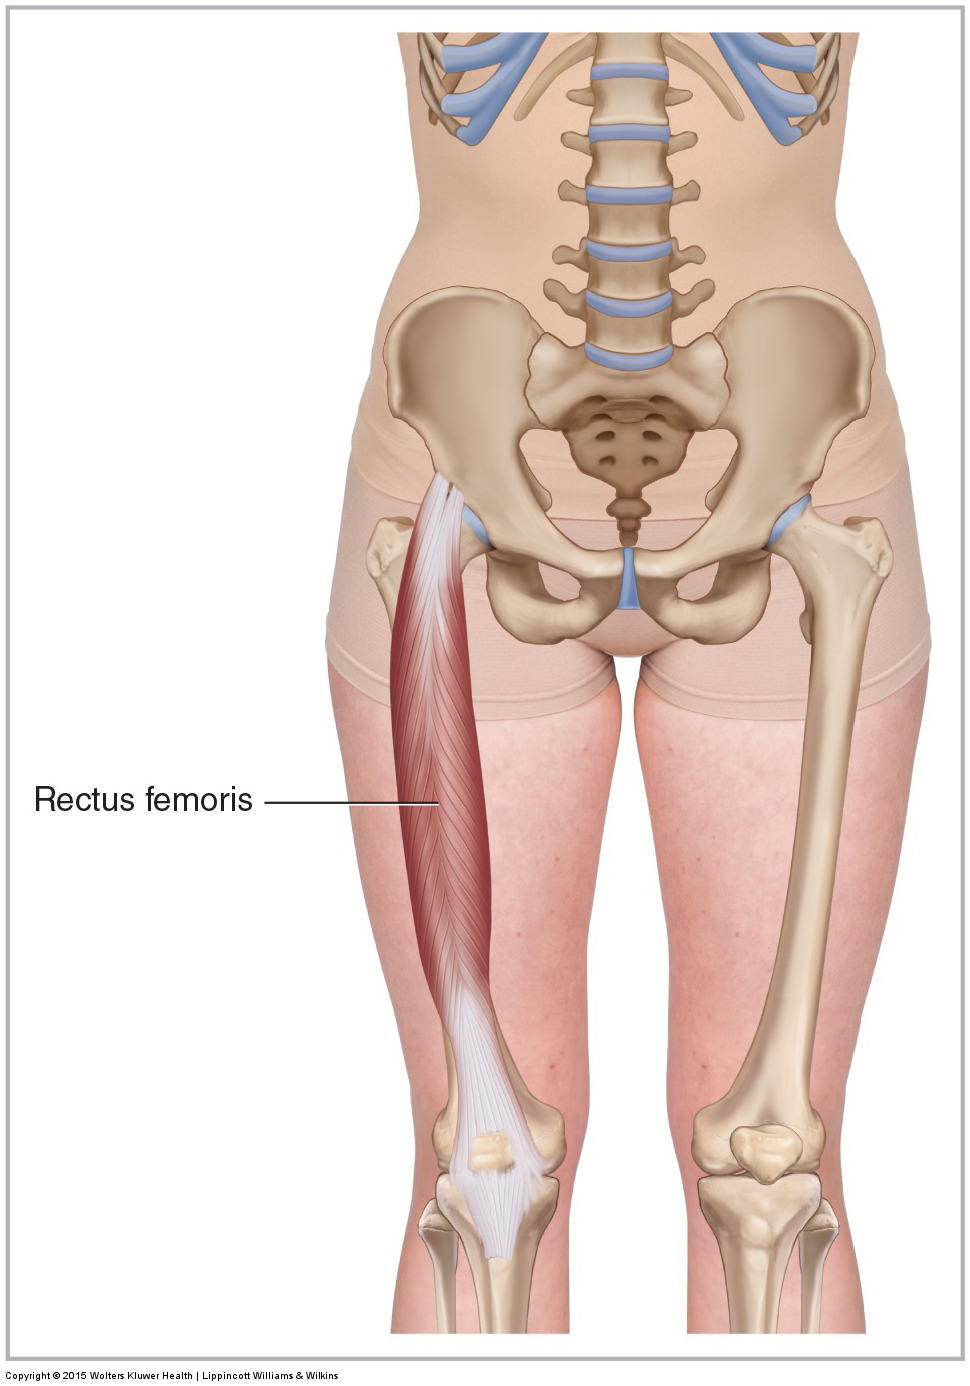 Anterior view of the right rectus femoris of the quadriceps femoris group